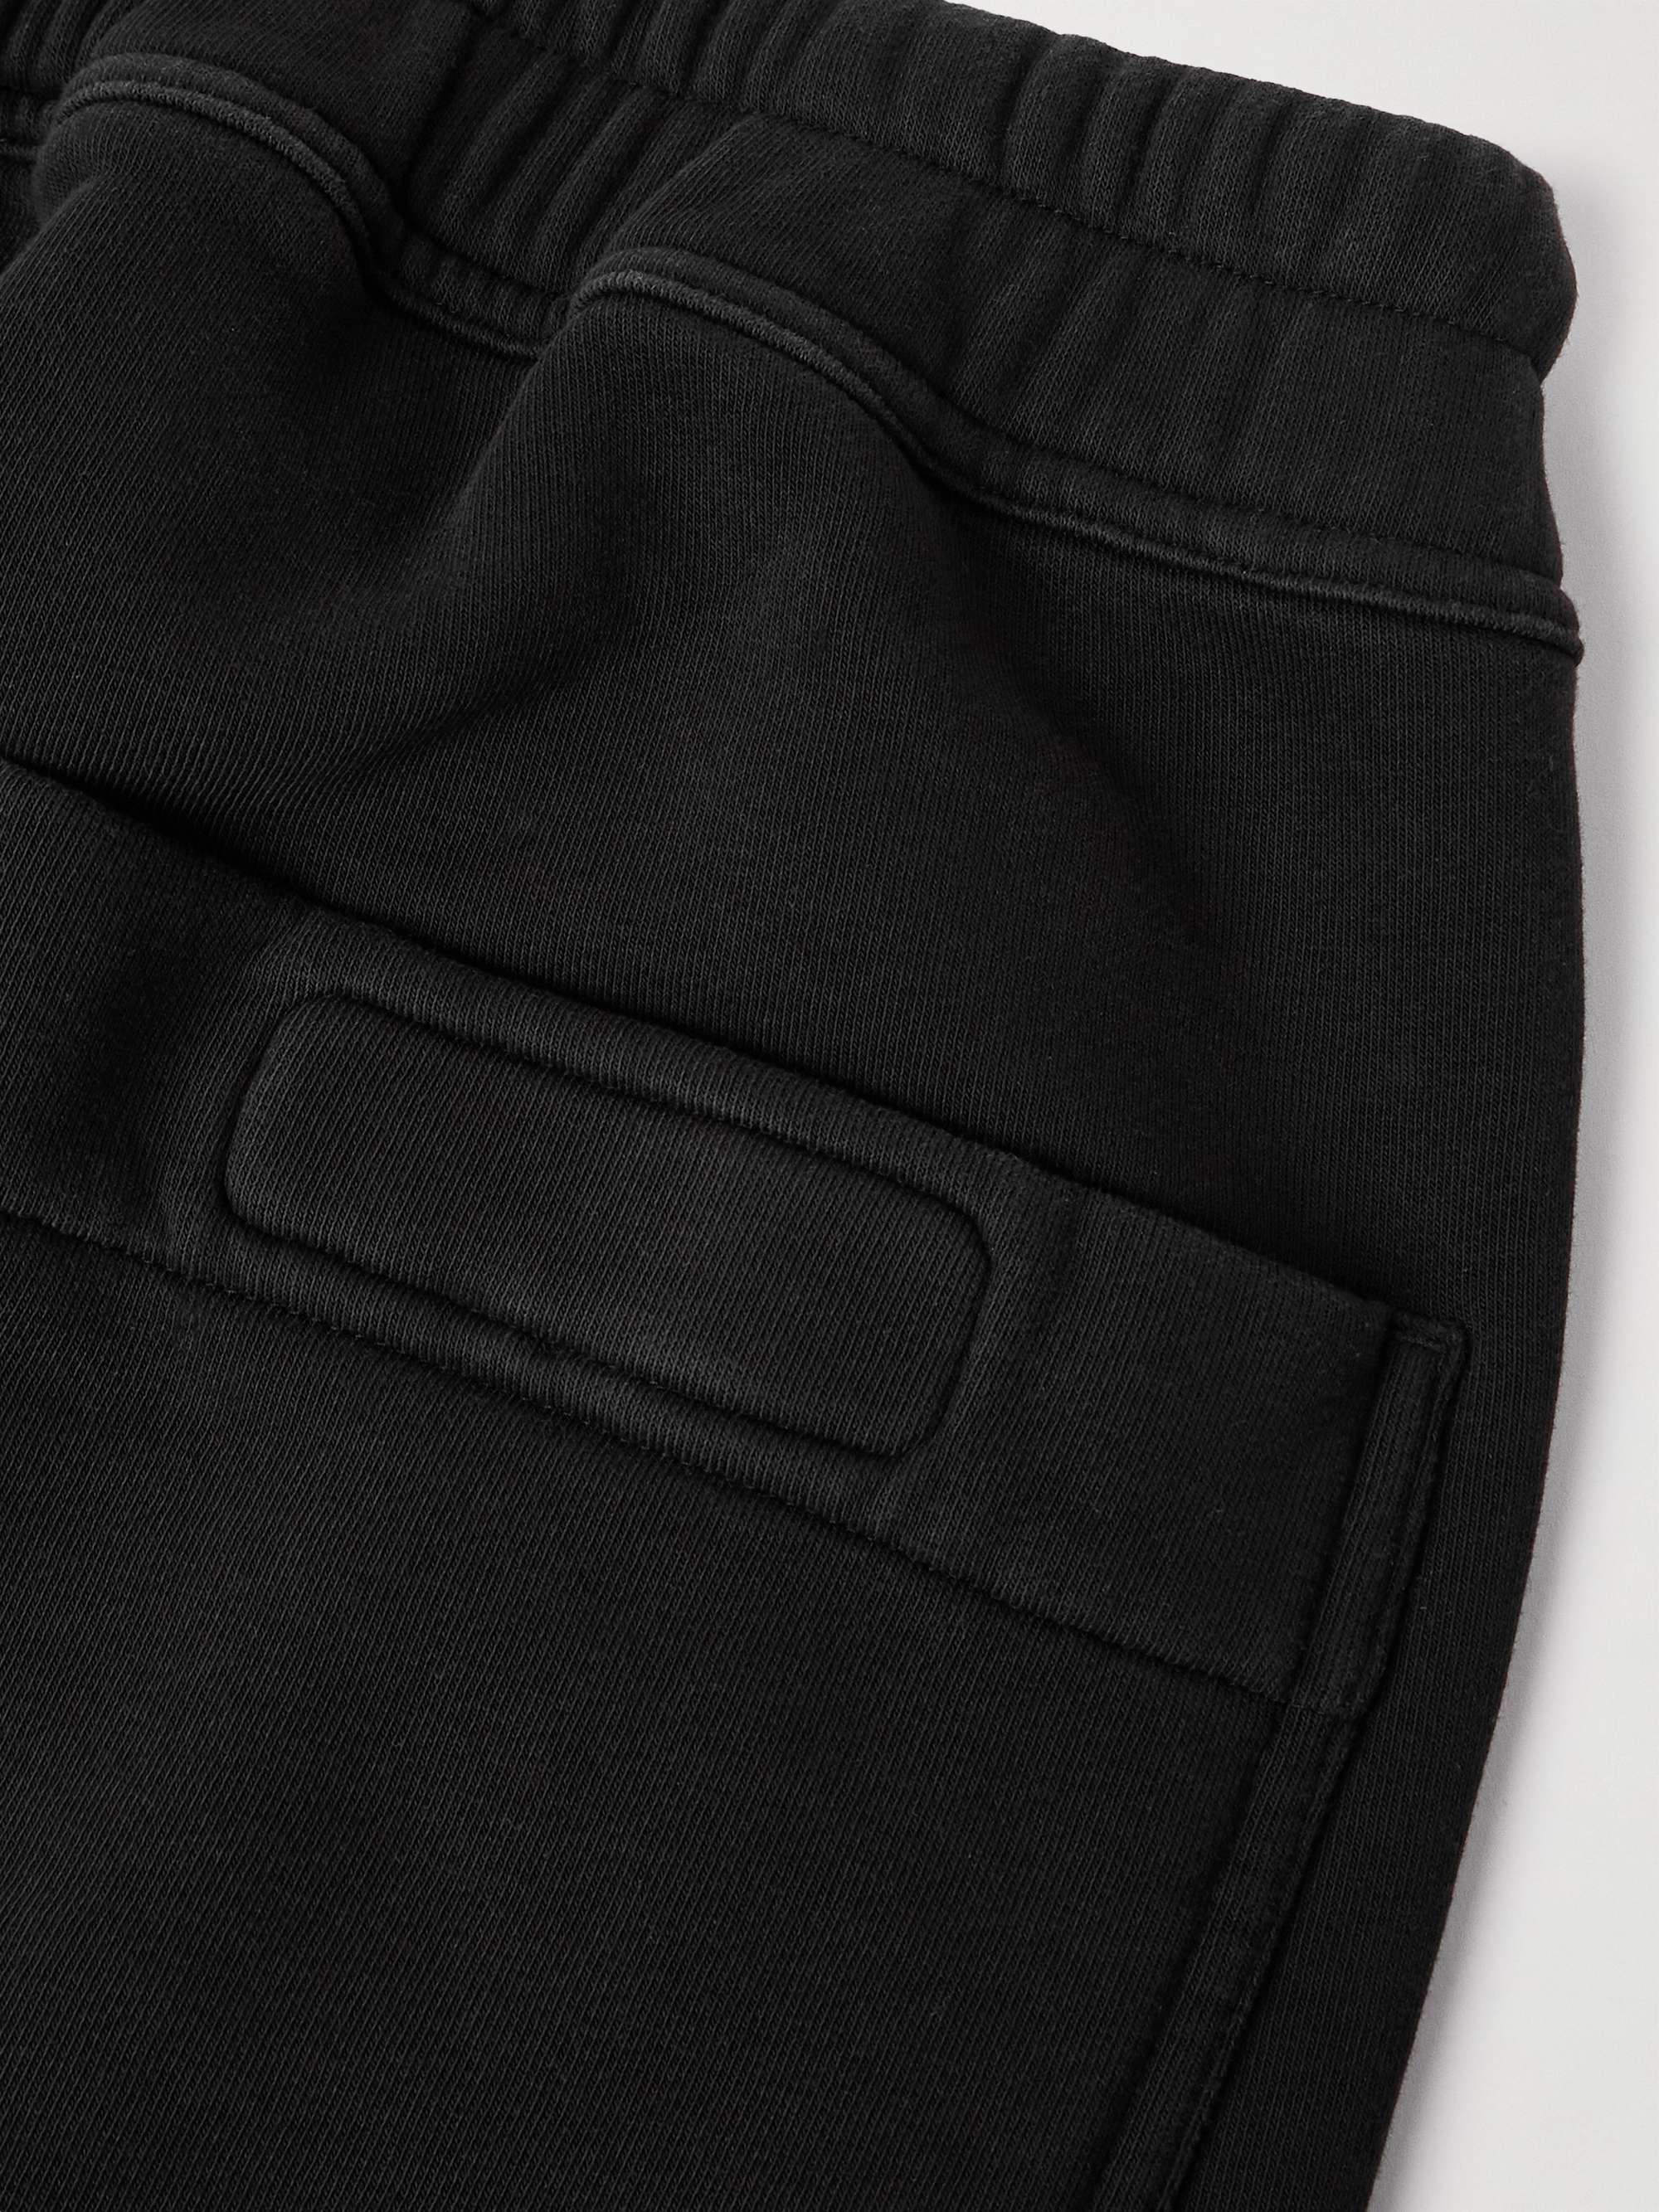 RICK OWENS + Moncler Cotton-Blend Jersey Sweatpants for Men | MR PORTER